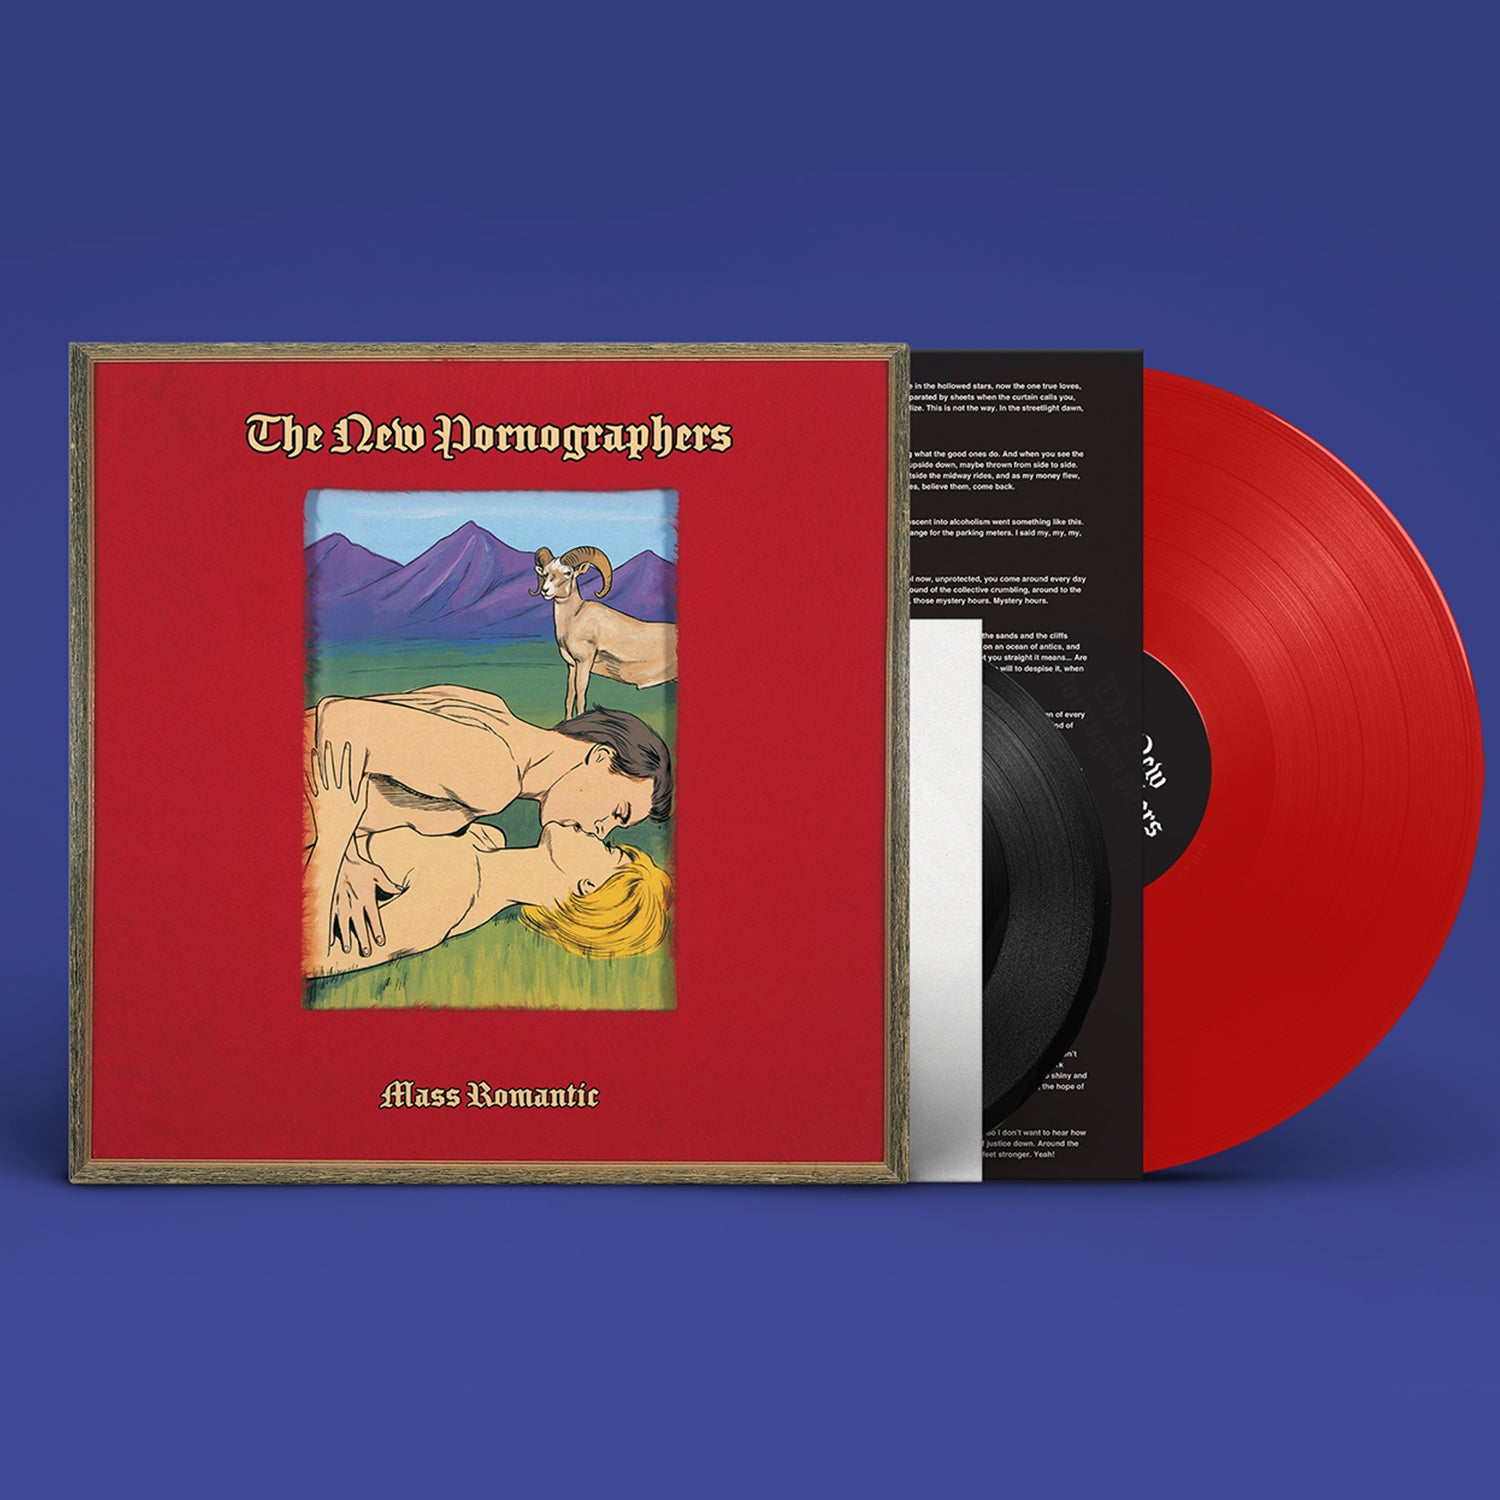 THE NEW PORNOGRAPHERS - Mass Romantic (Matador Revisionist History Ed.)- LP + Bonus 7" - Red Vinyl